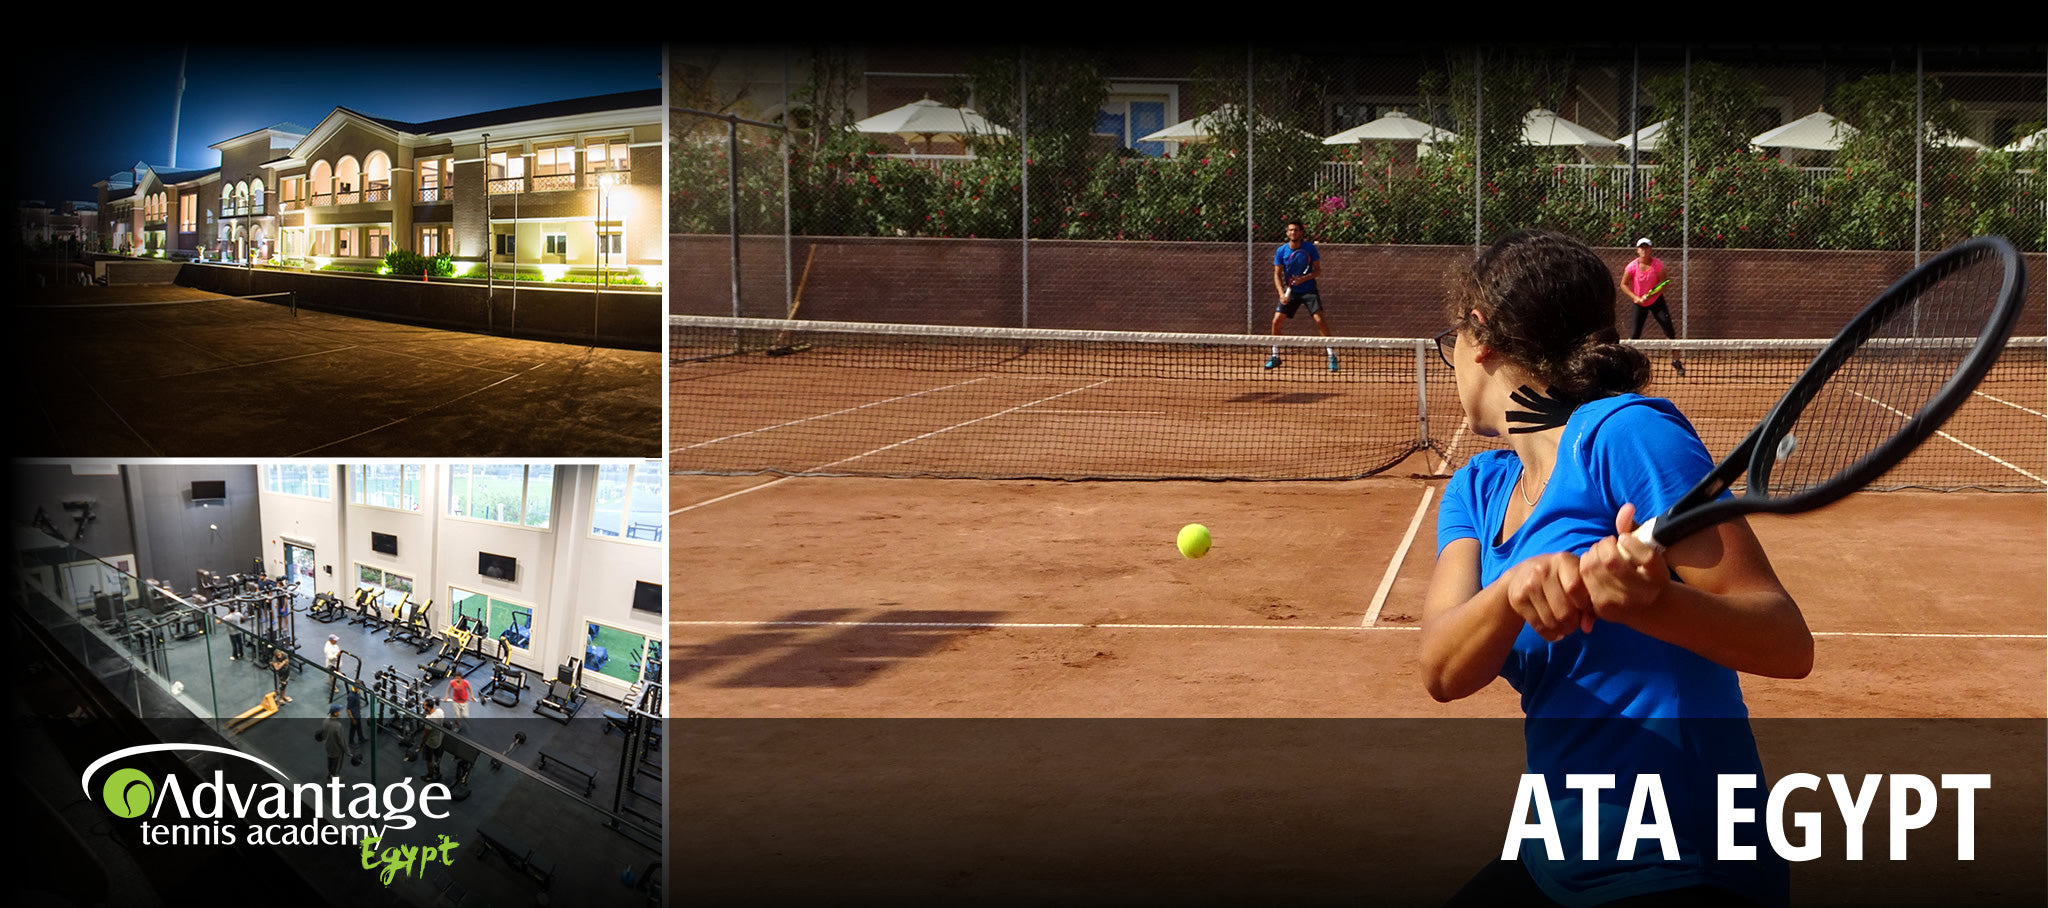 Advantage Tennis Academy in Egypt